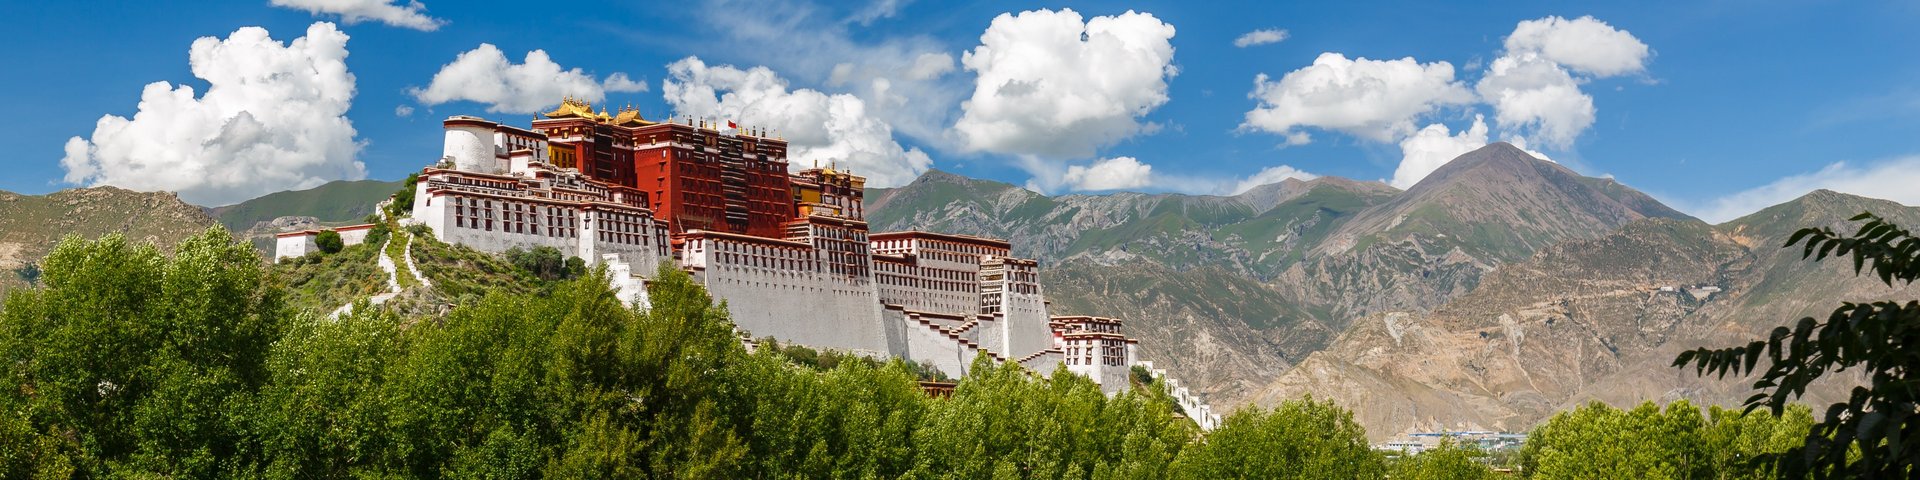 Blick auf den Potala-Palast in Lhasa, Tibet